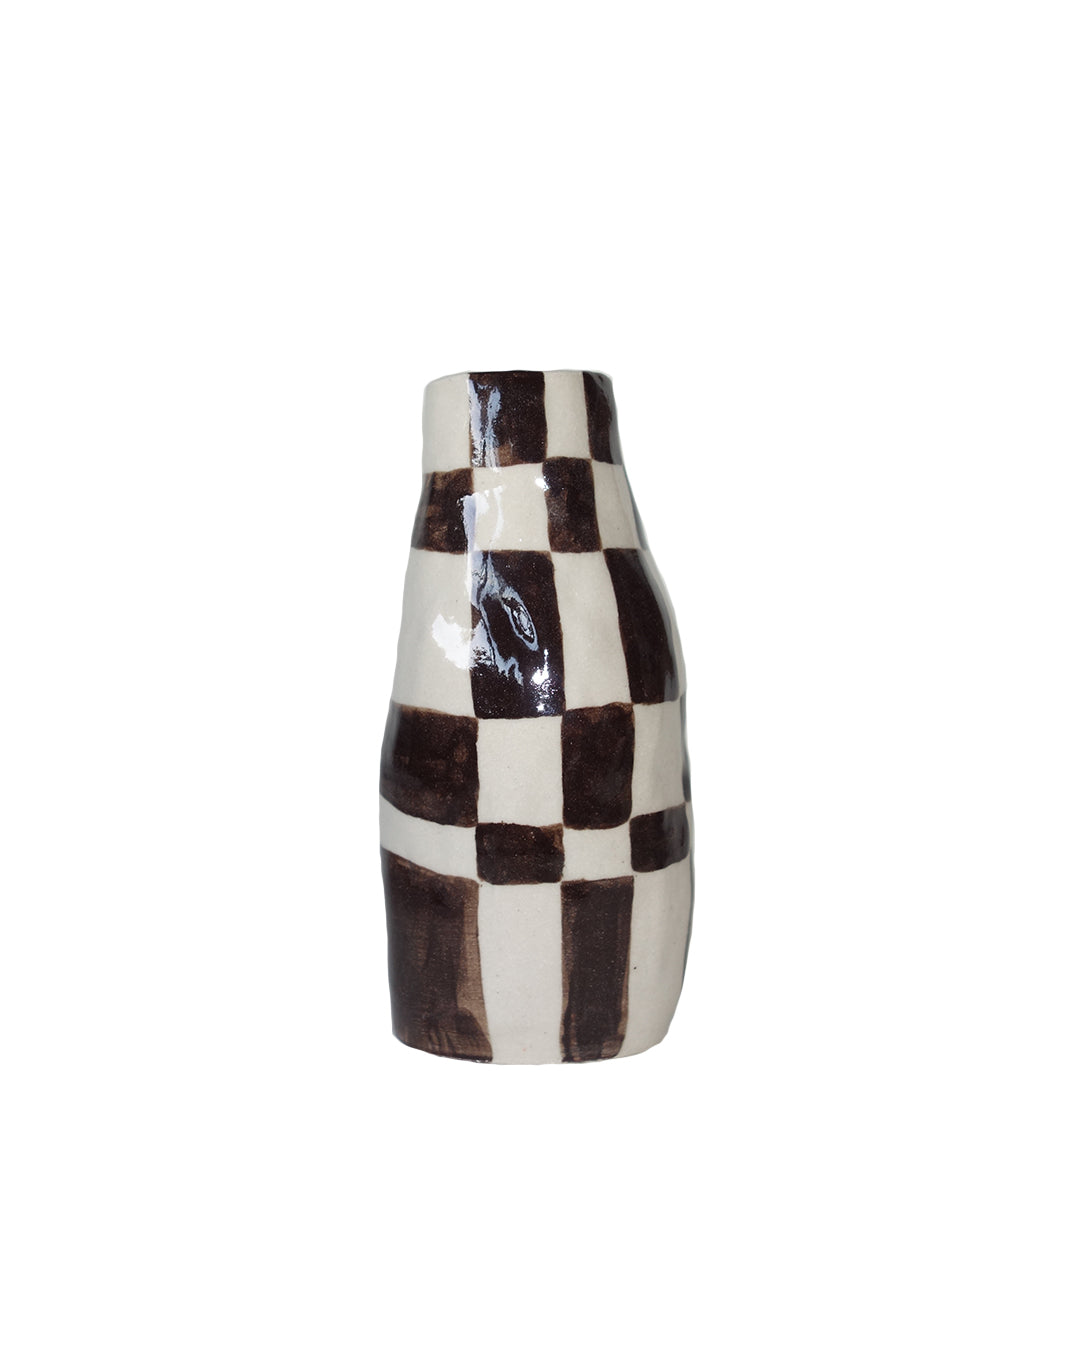 Medium Brown Checker Vase